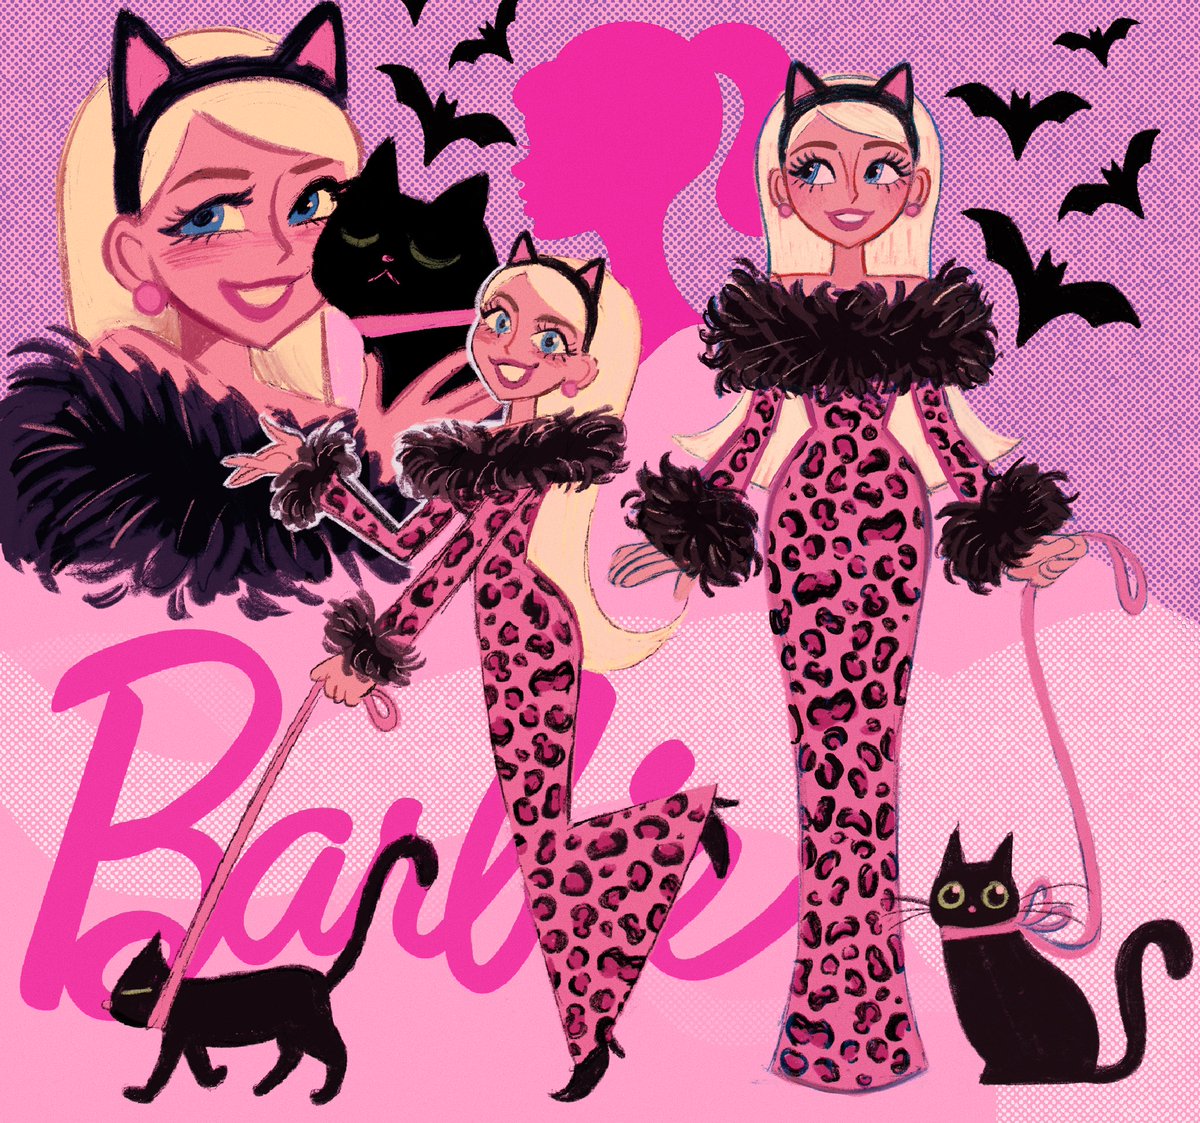 happy Halloween from 2002 perrr-fectly Halloween barbie!!!